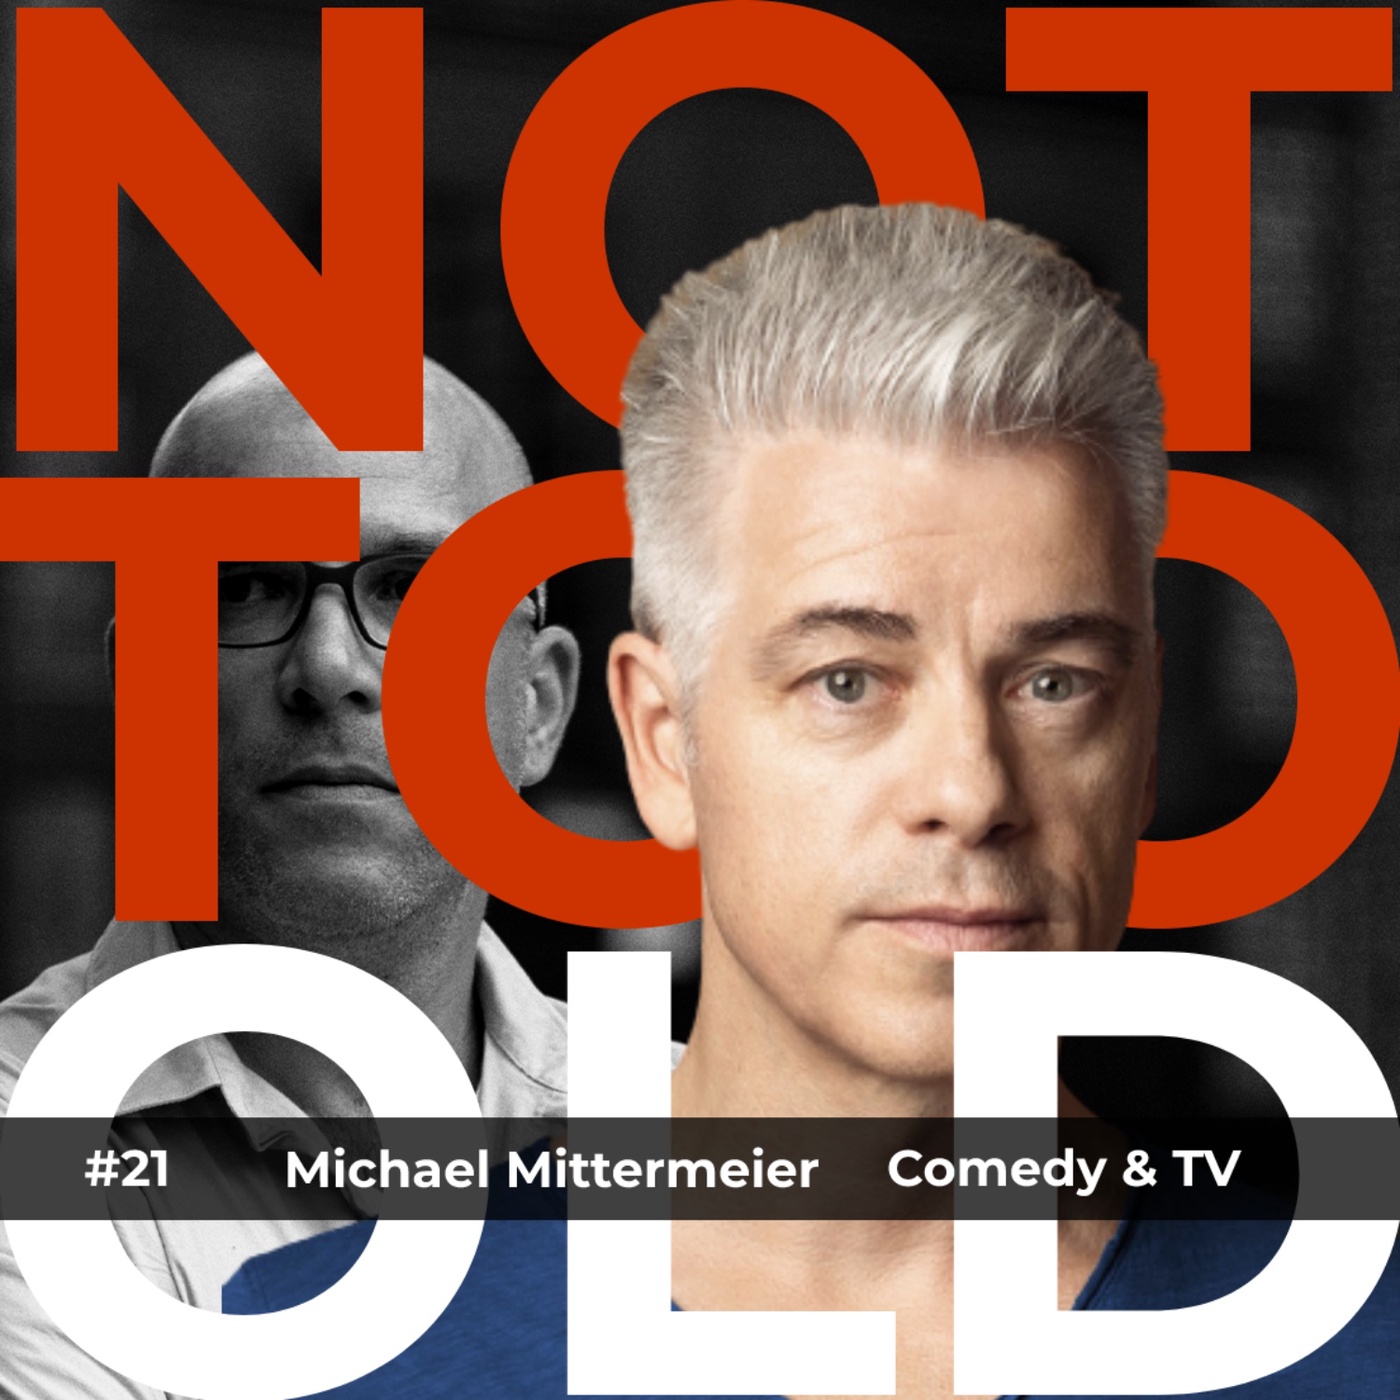 #21 Comedy & TV - Michael Mittermeier